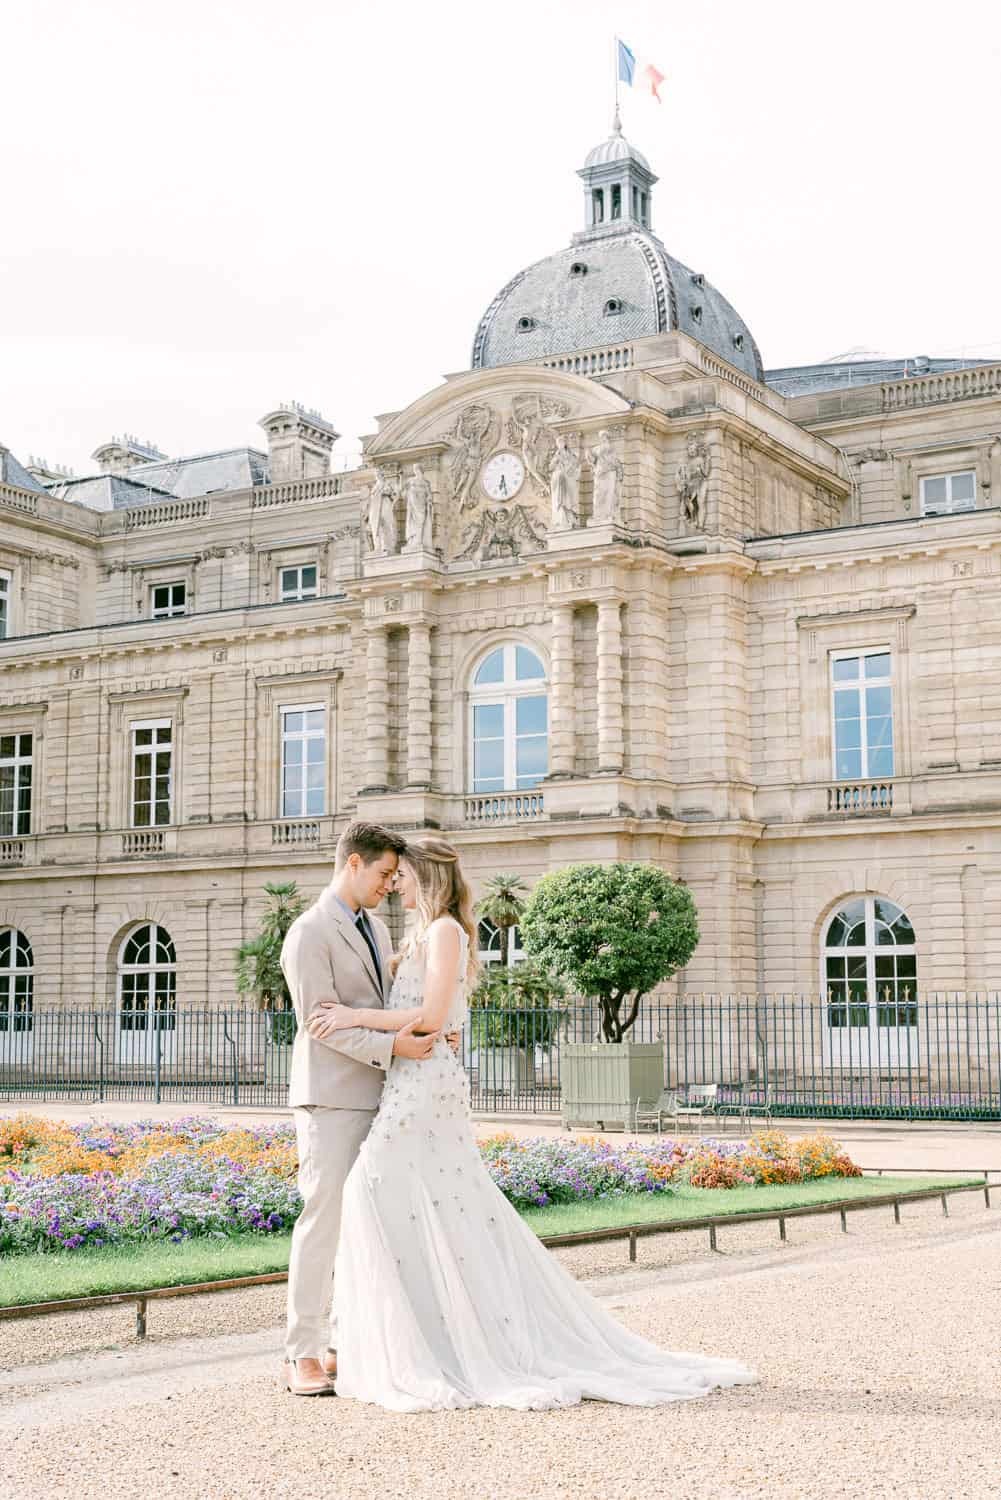 Jardin du Luxembourg Couples Portraits, Paris Wedding Photos, Paris Wedding Photographer, Theresa Kelly